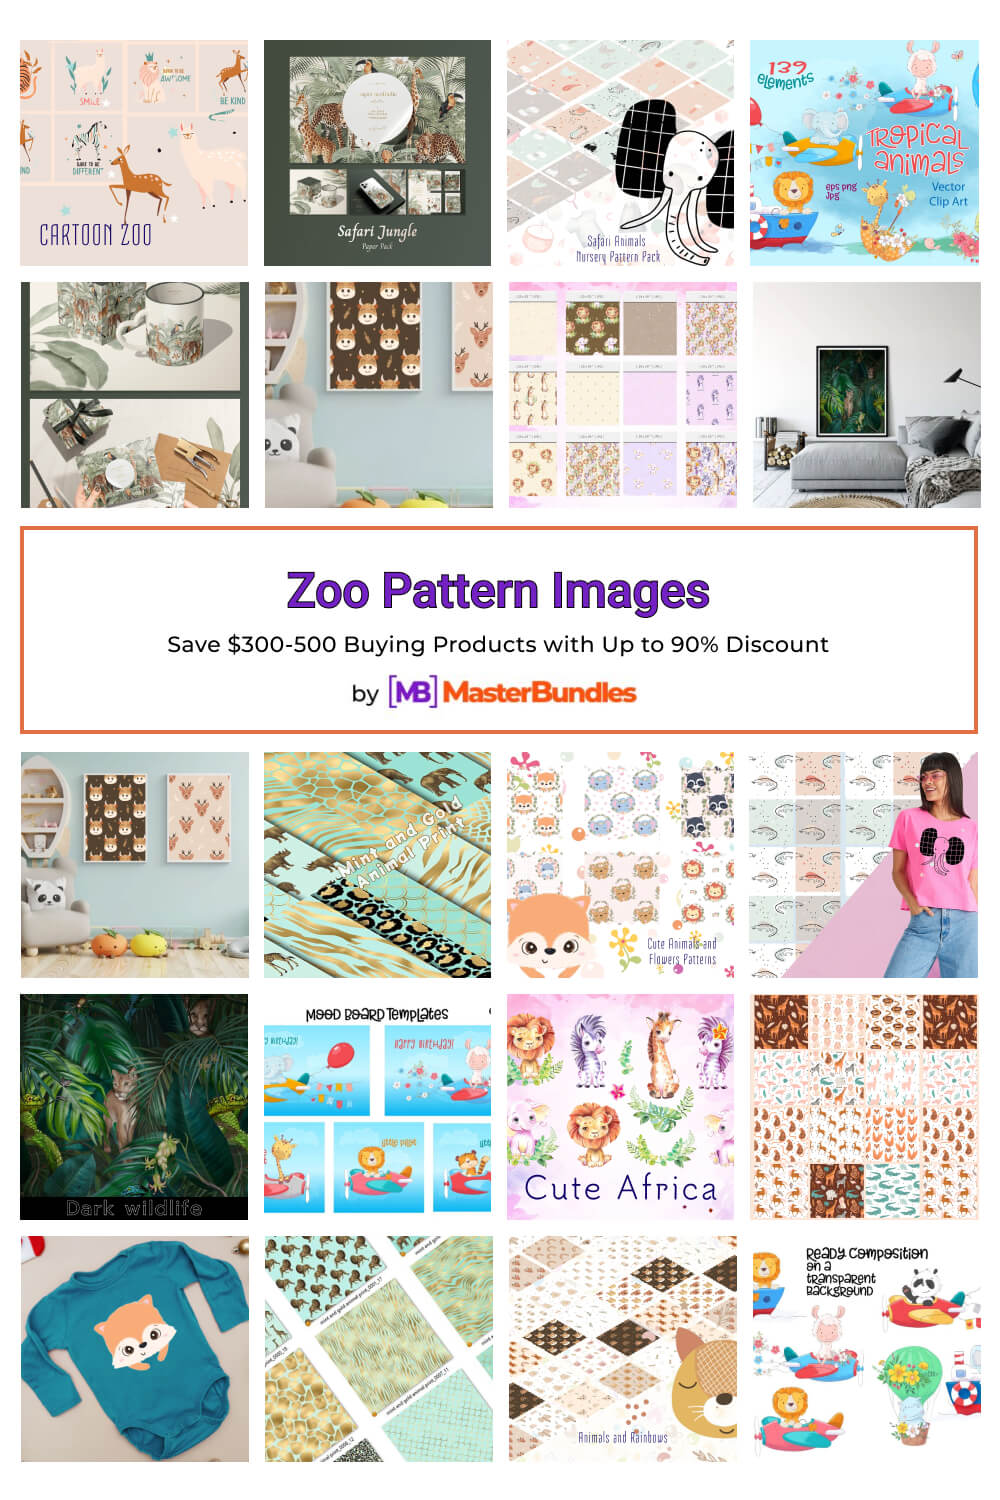 zoo pattern images pinterest image.